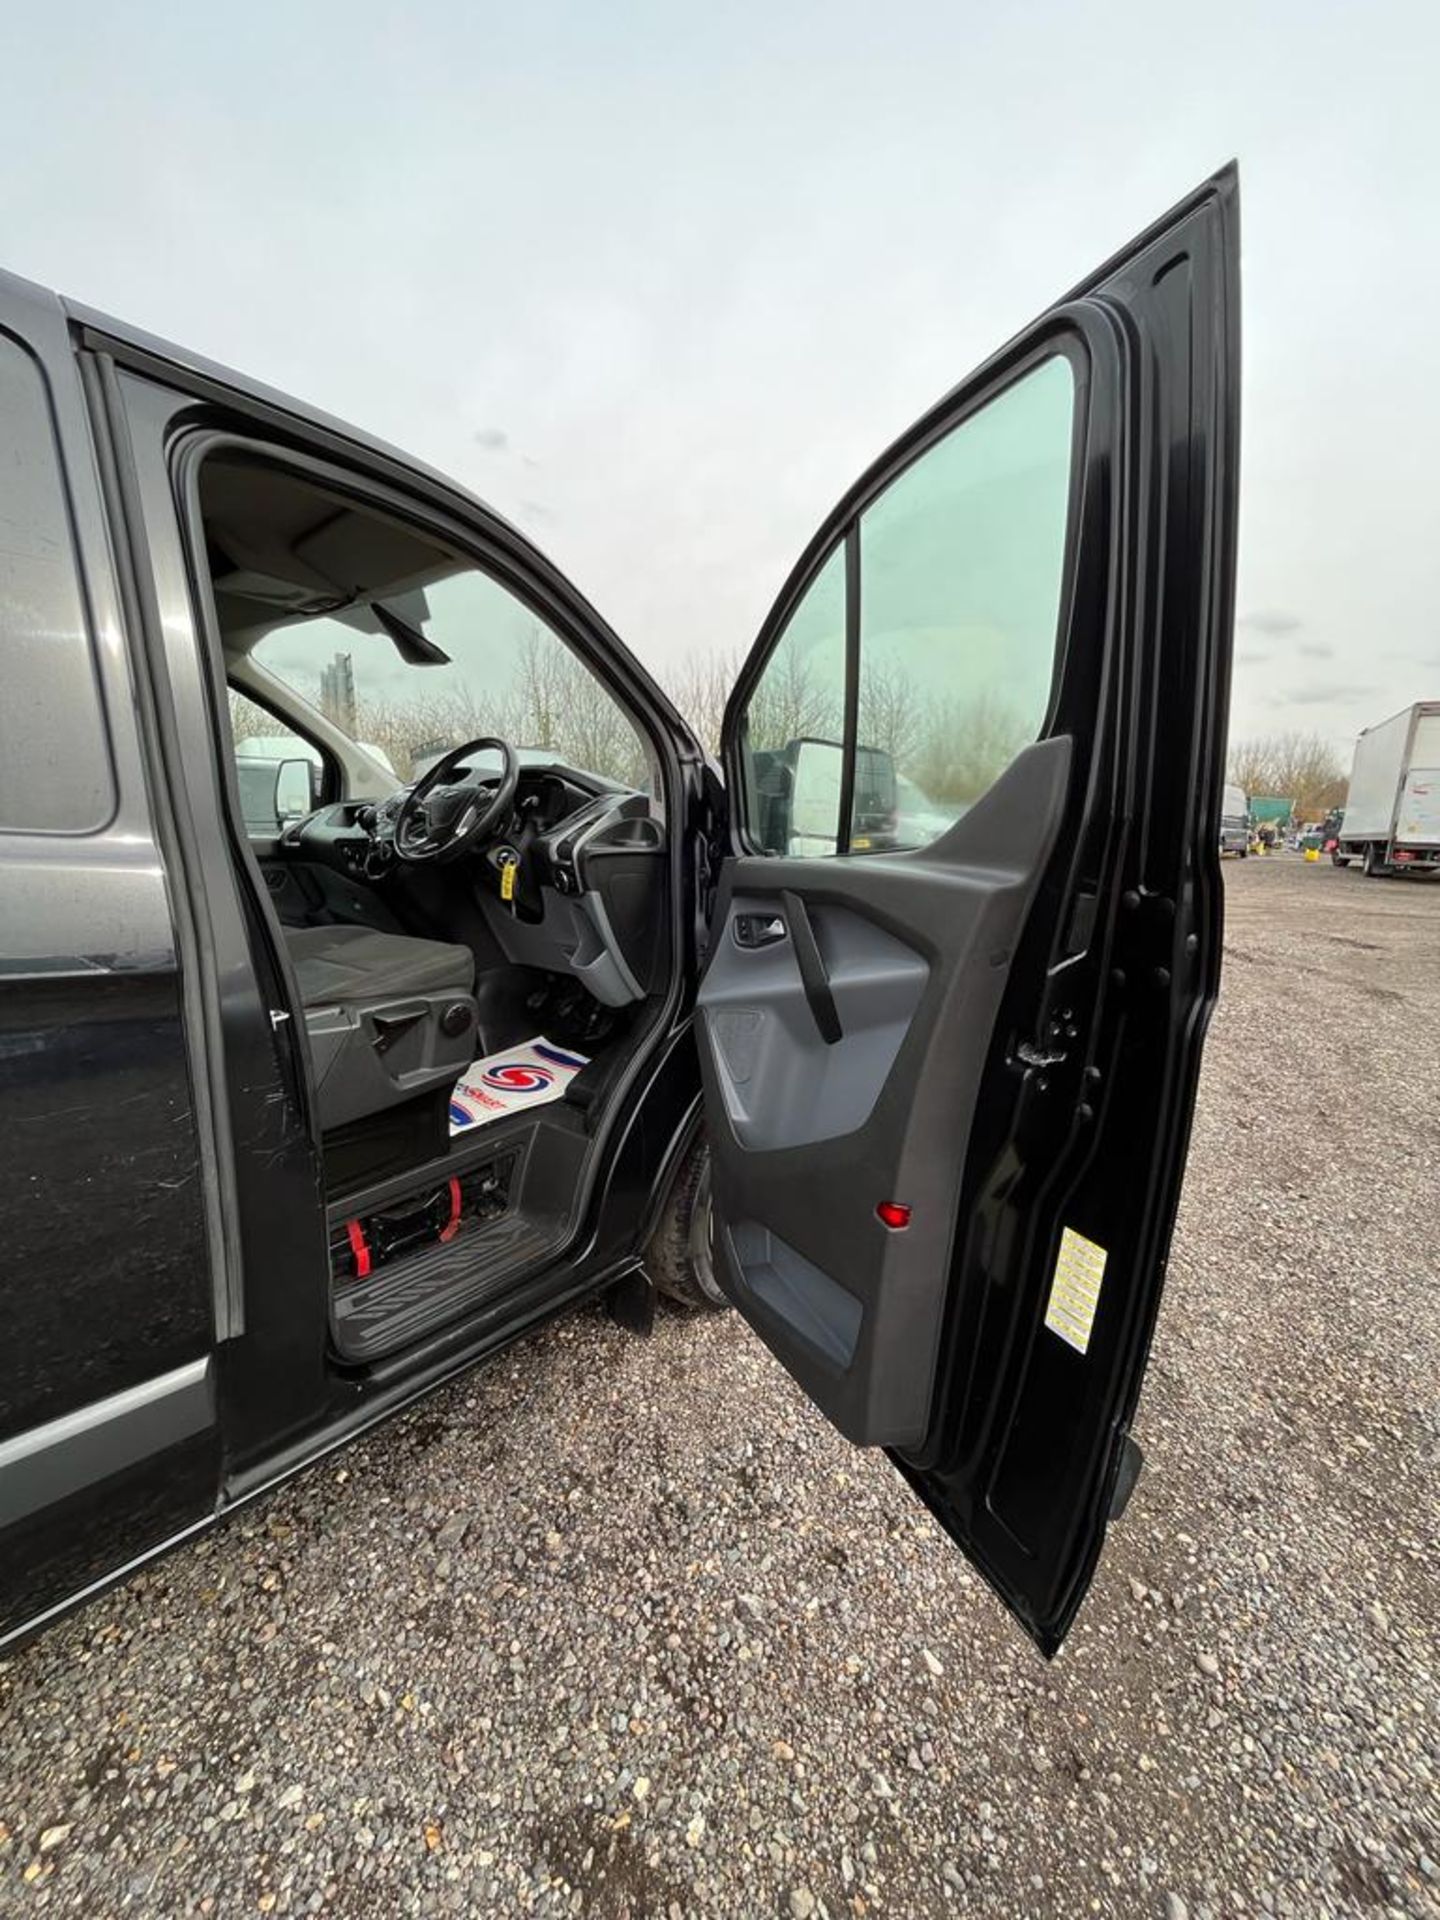 ** ON SALE ** Ford Transit Custom 2.2 TDCI 270 E-Tech Trend L1 H1 2015 '15 Reg' - Panel Van - Image 12 of 23